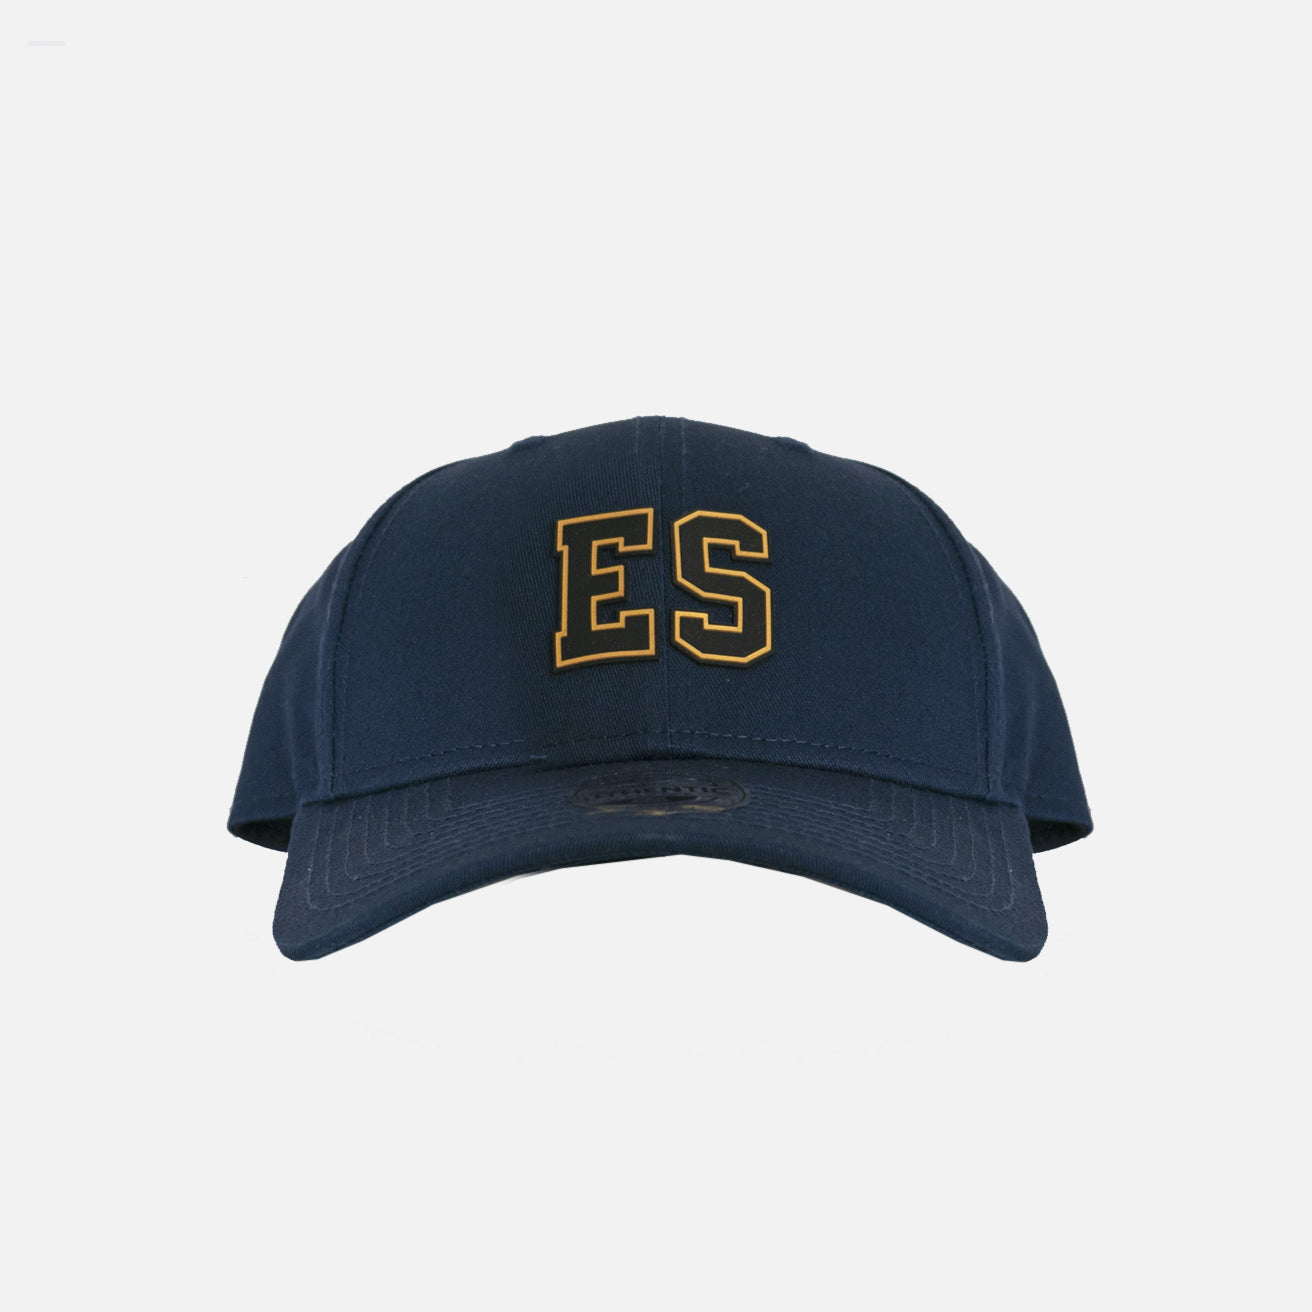 El Salvador Structured Hat